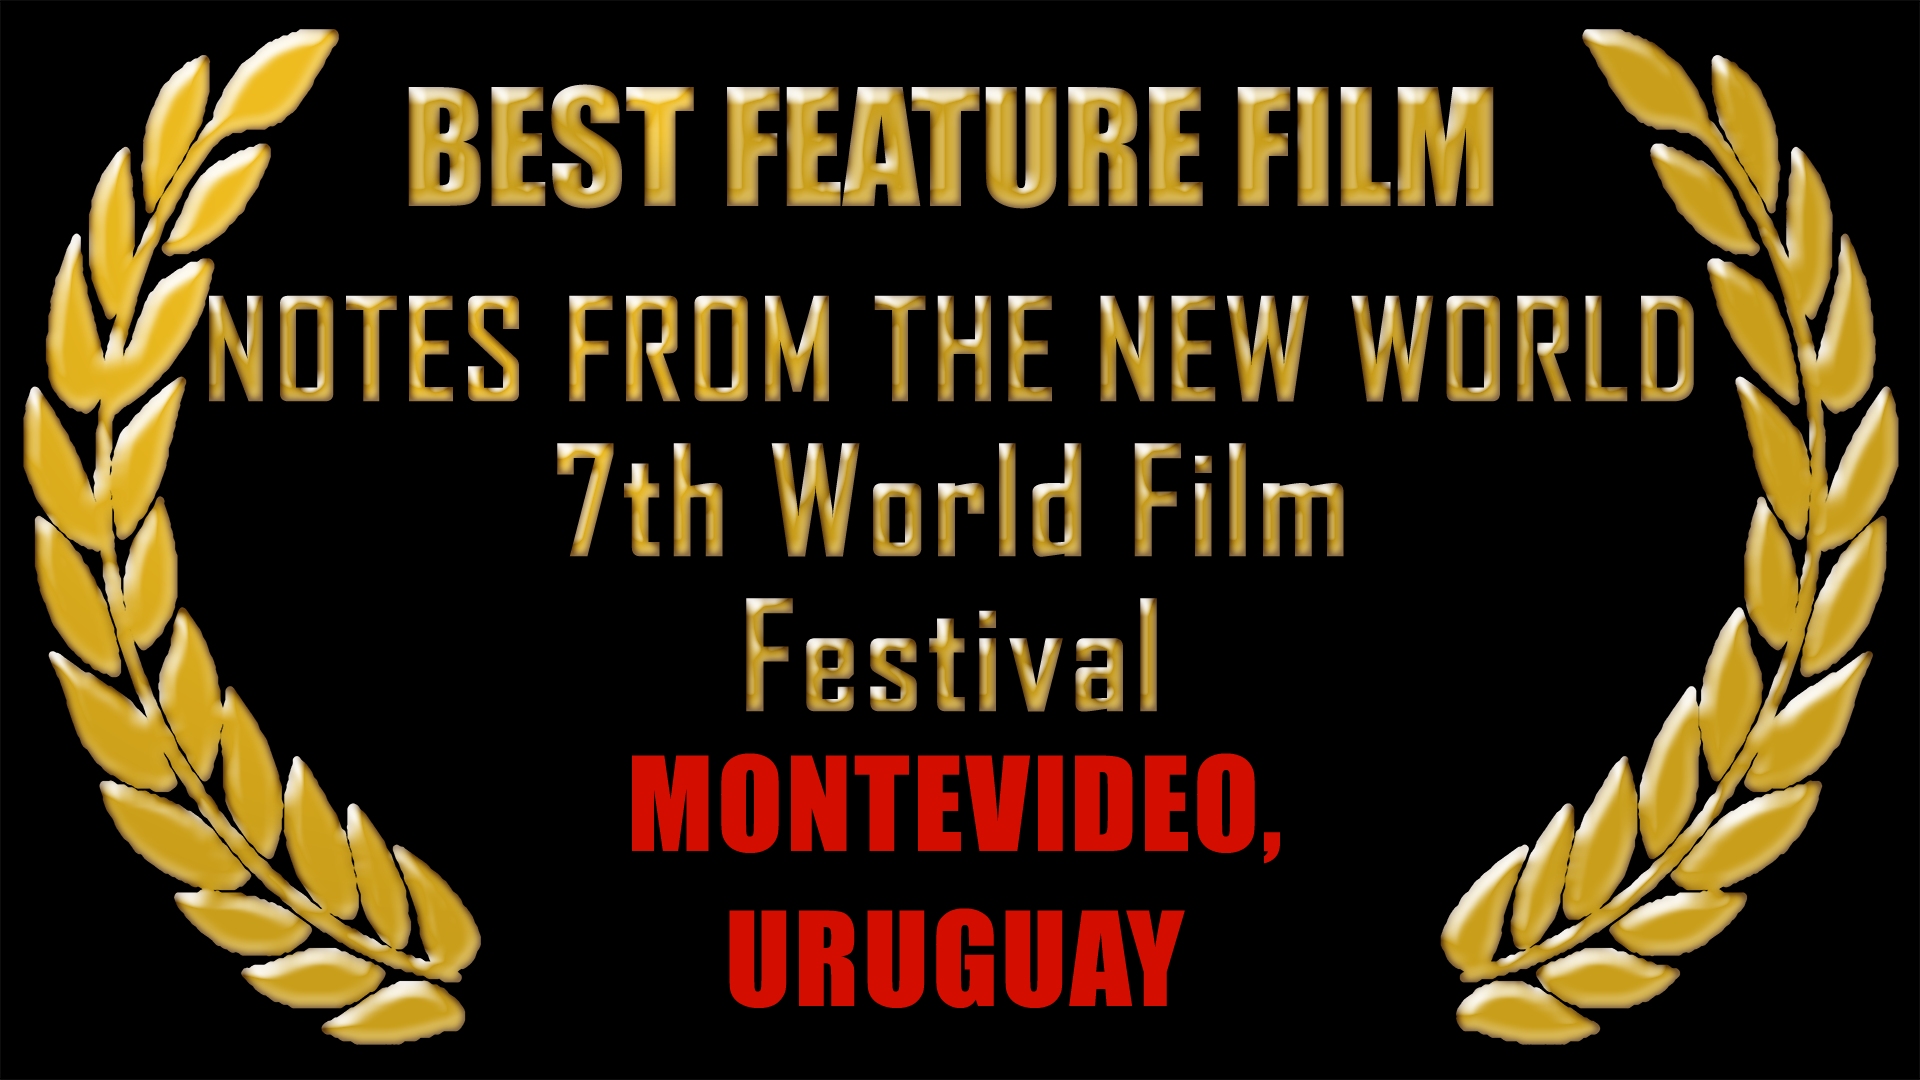 Best Feature Film, Montevideo, Uruguay